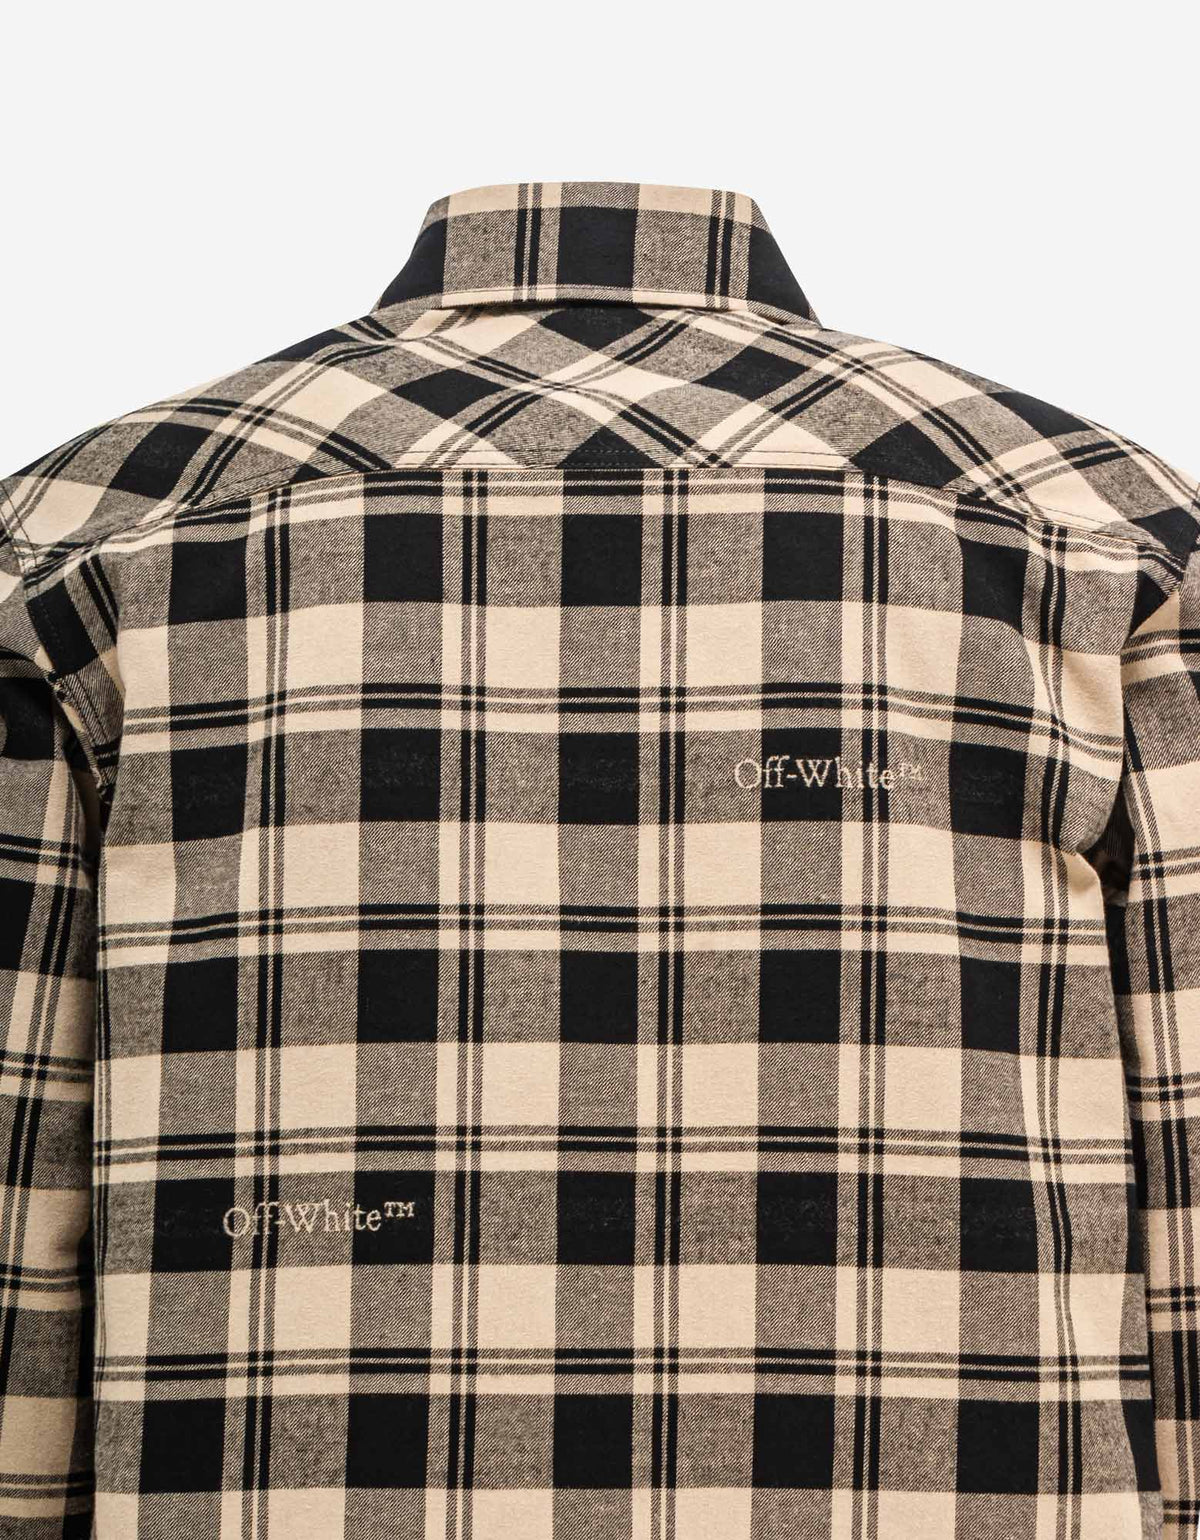 Off-White c/o Virgil Abloh Beige & Black Check Flannel Shirt